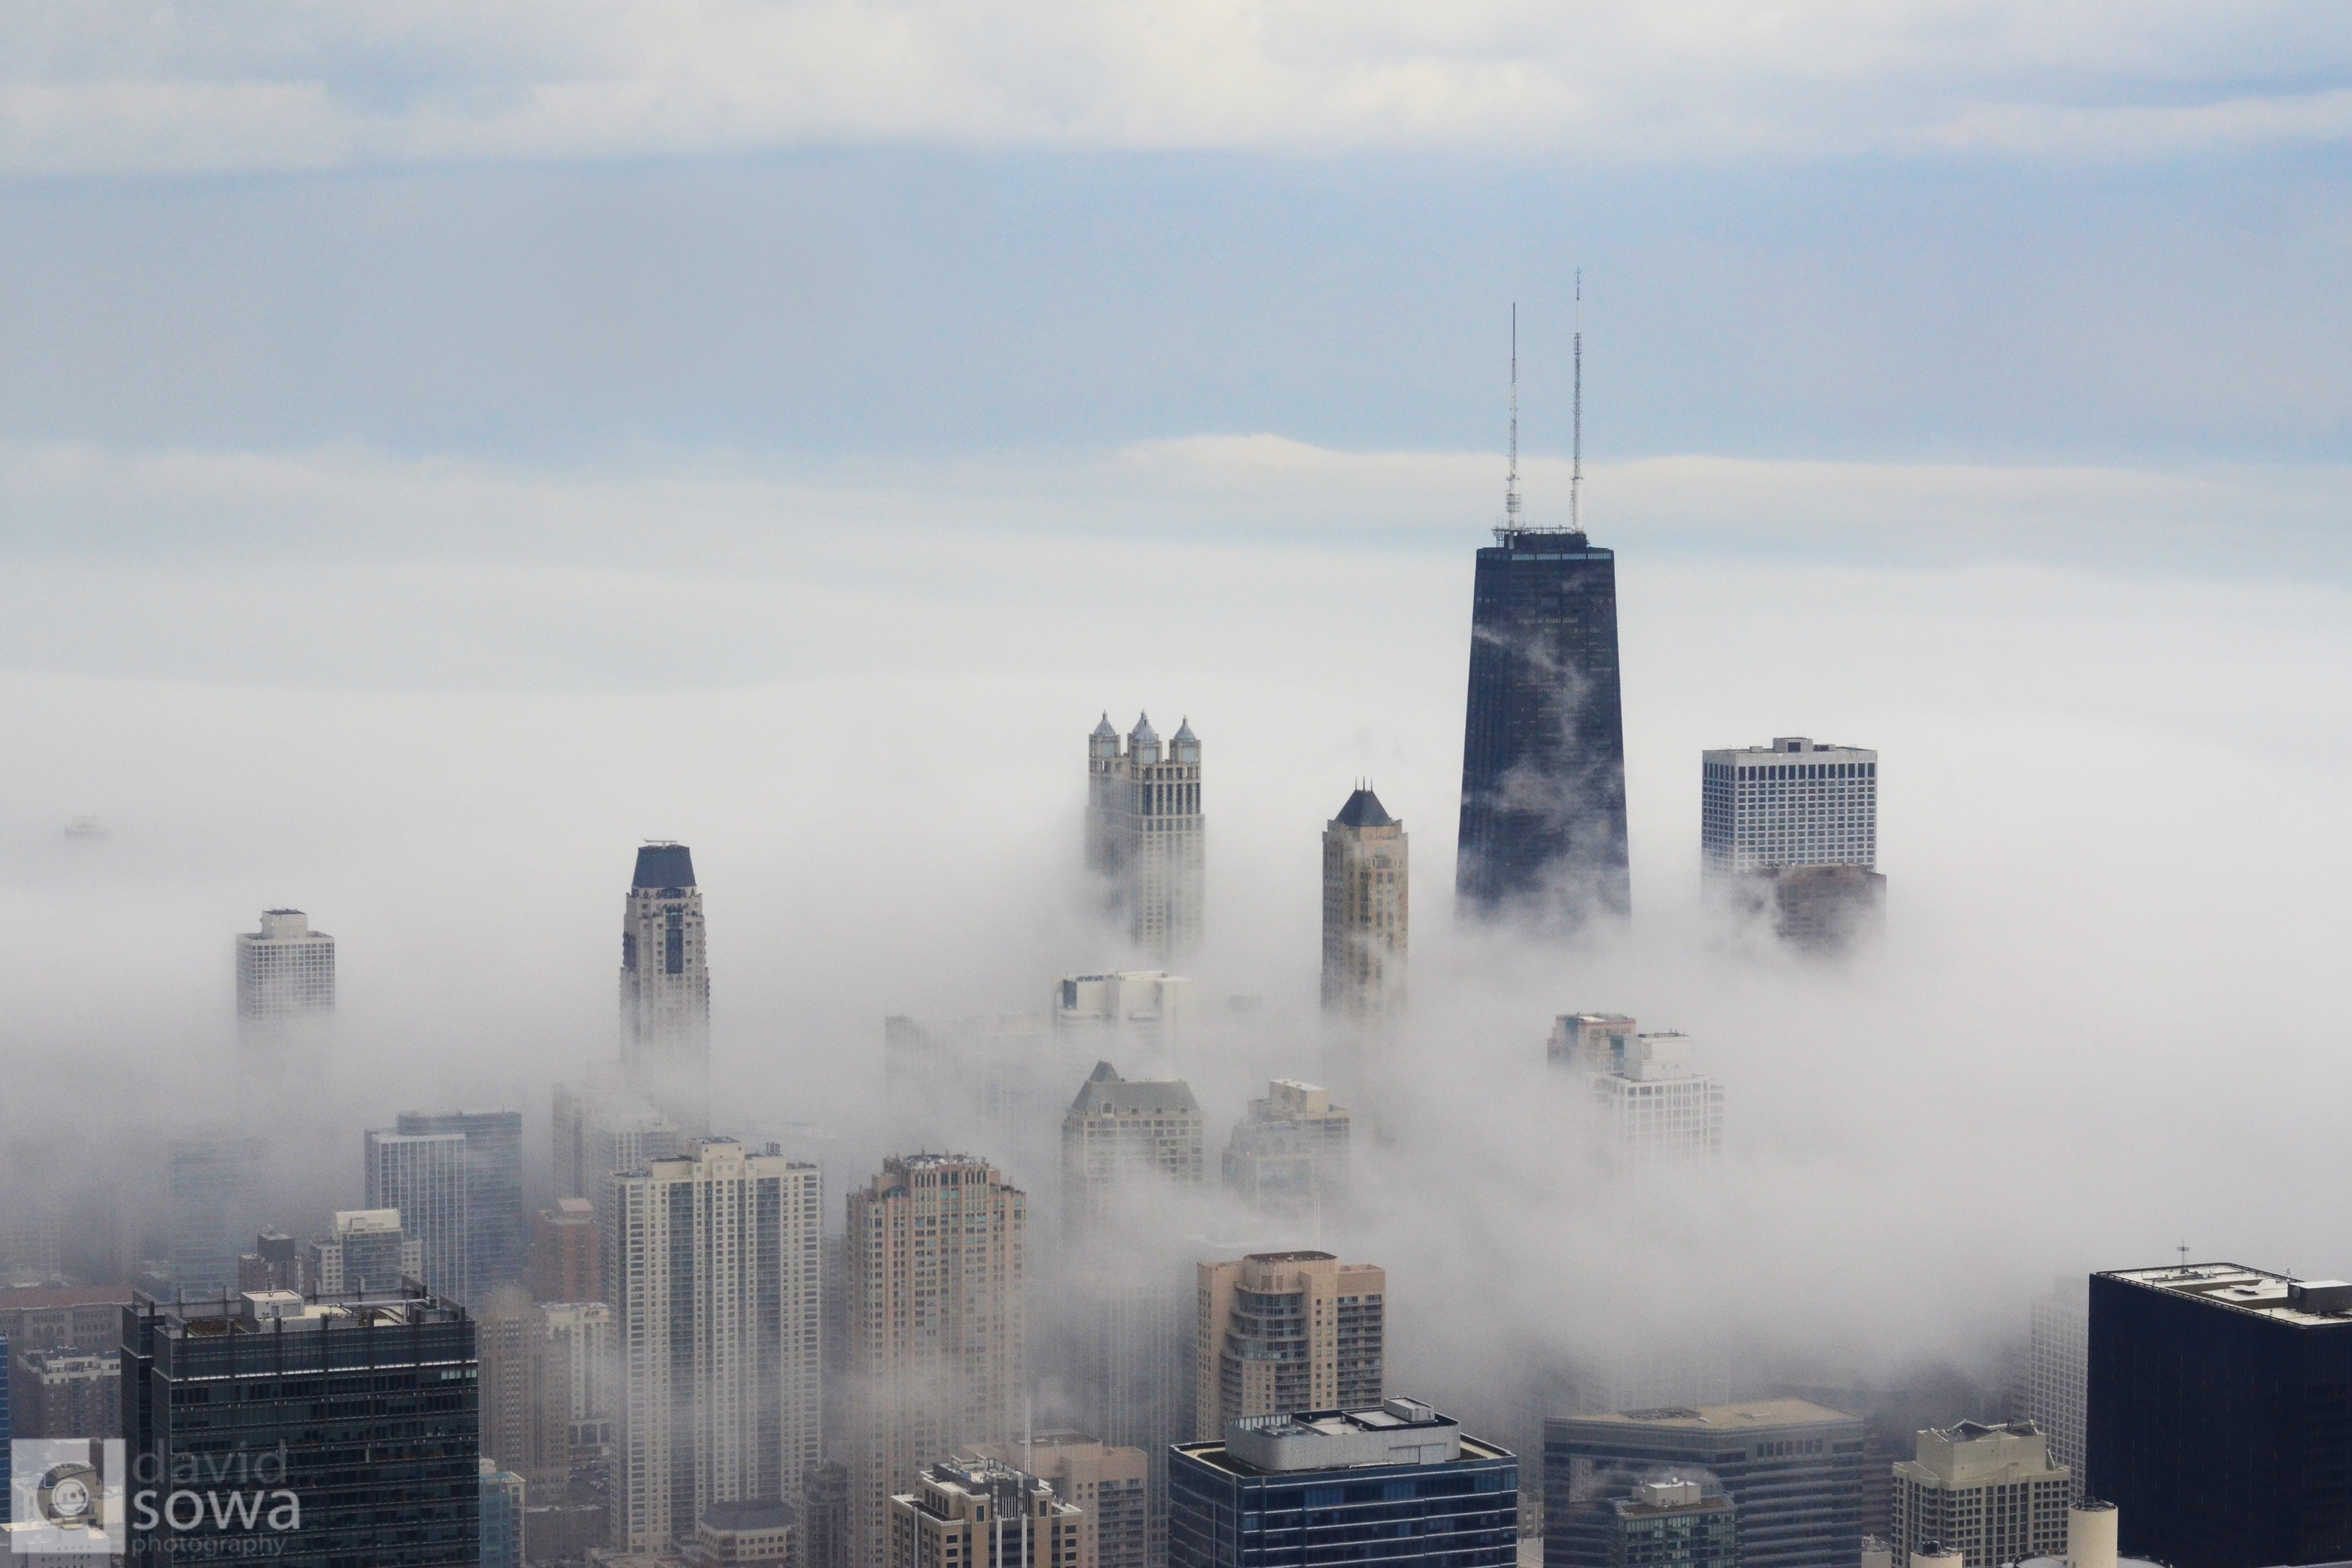 Fog rolling through and blanketing downtown Chicago | David Sowa